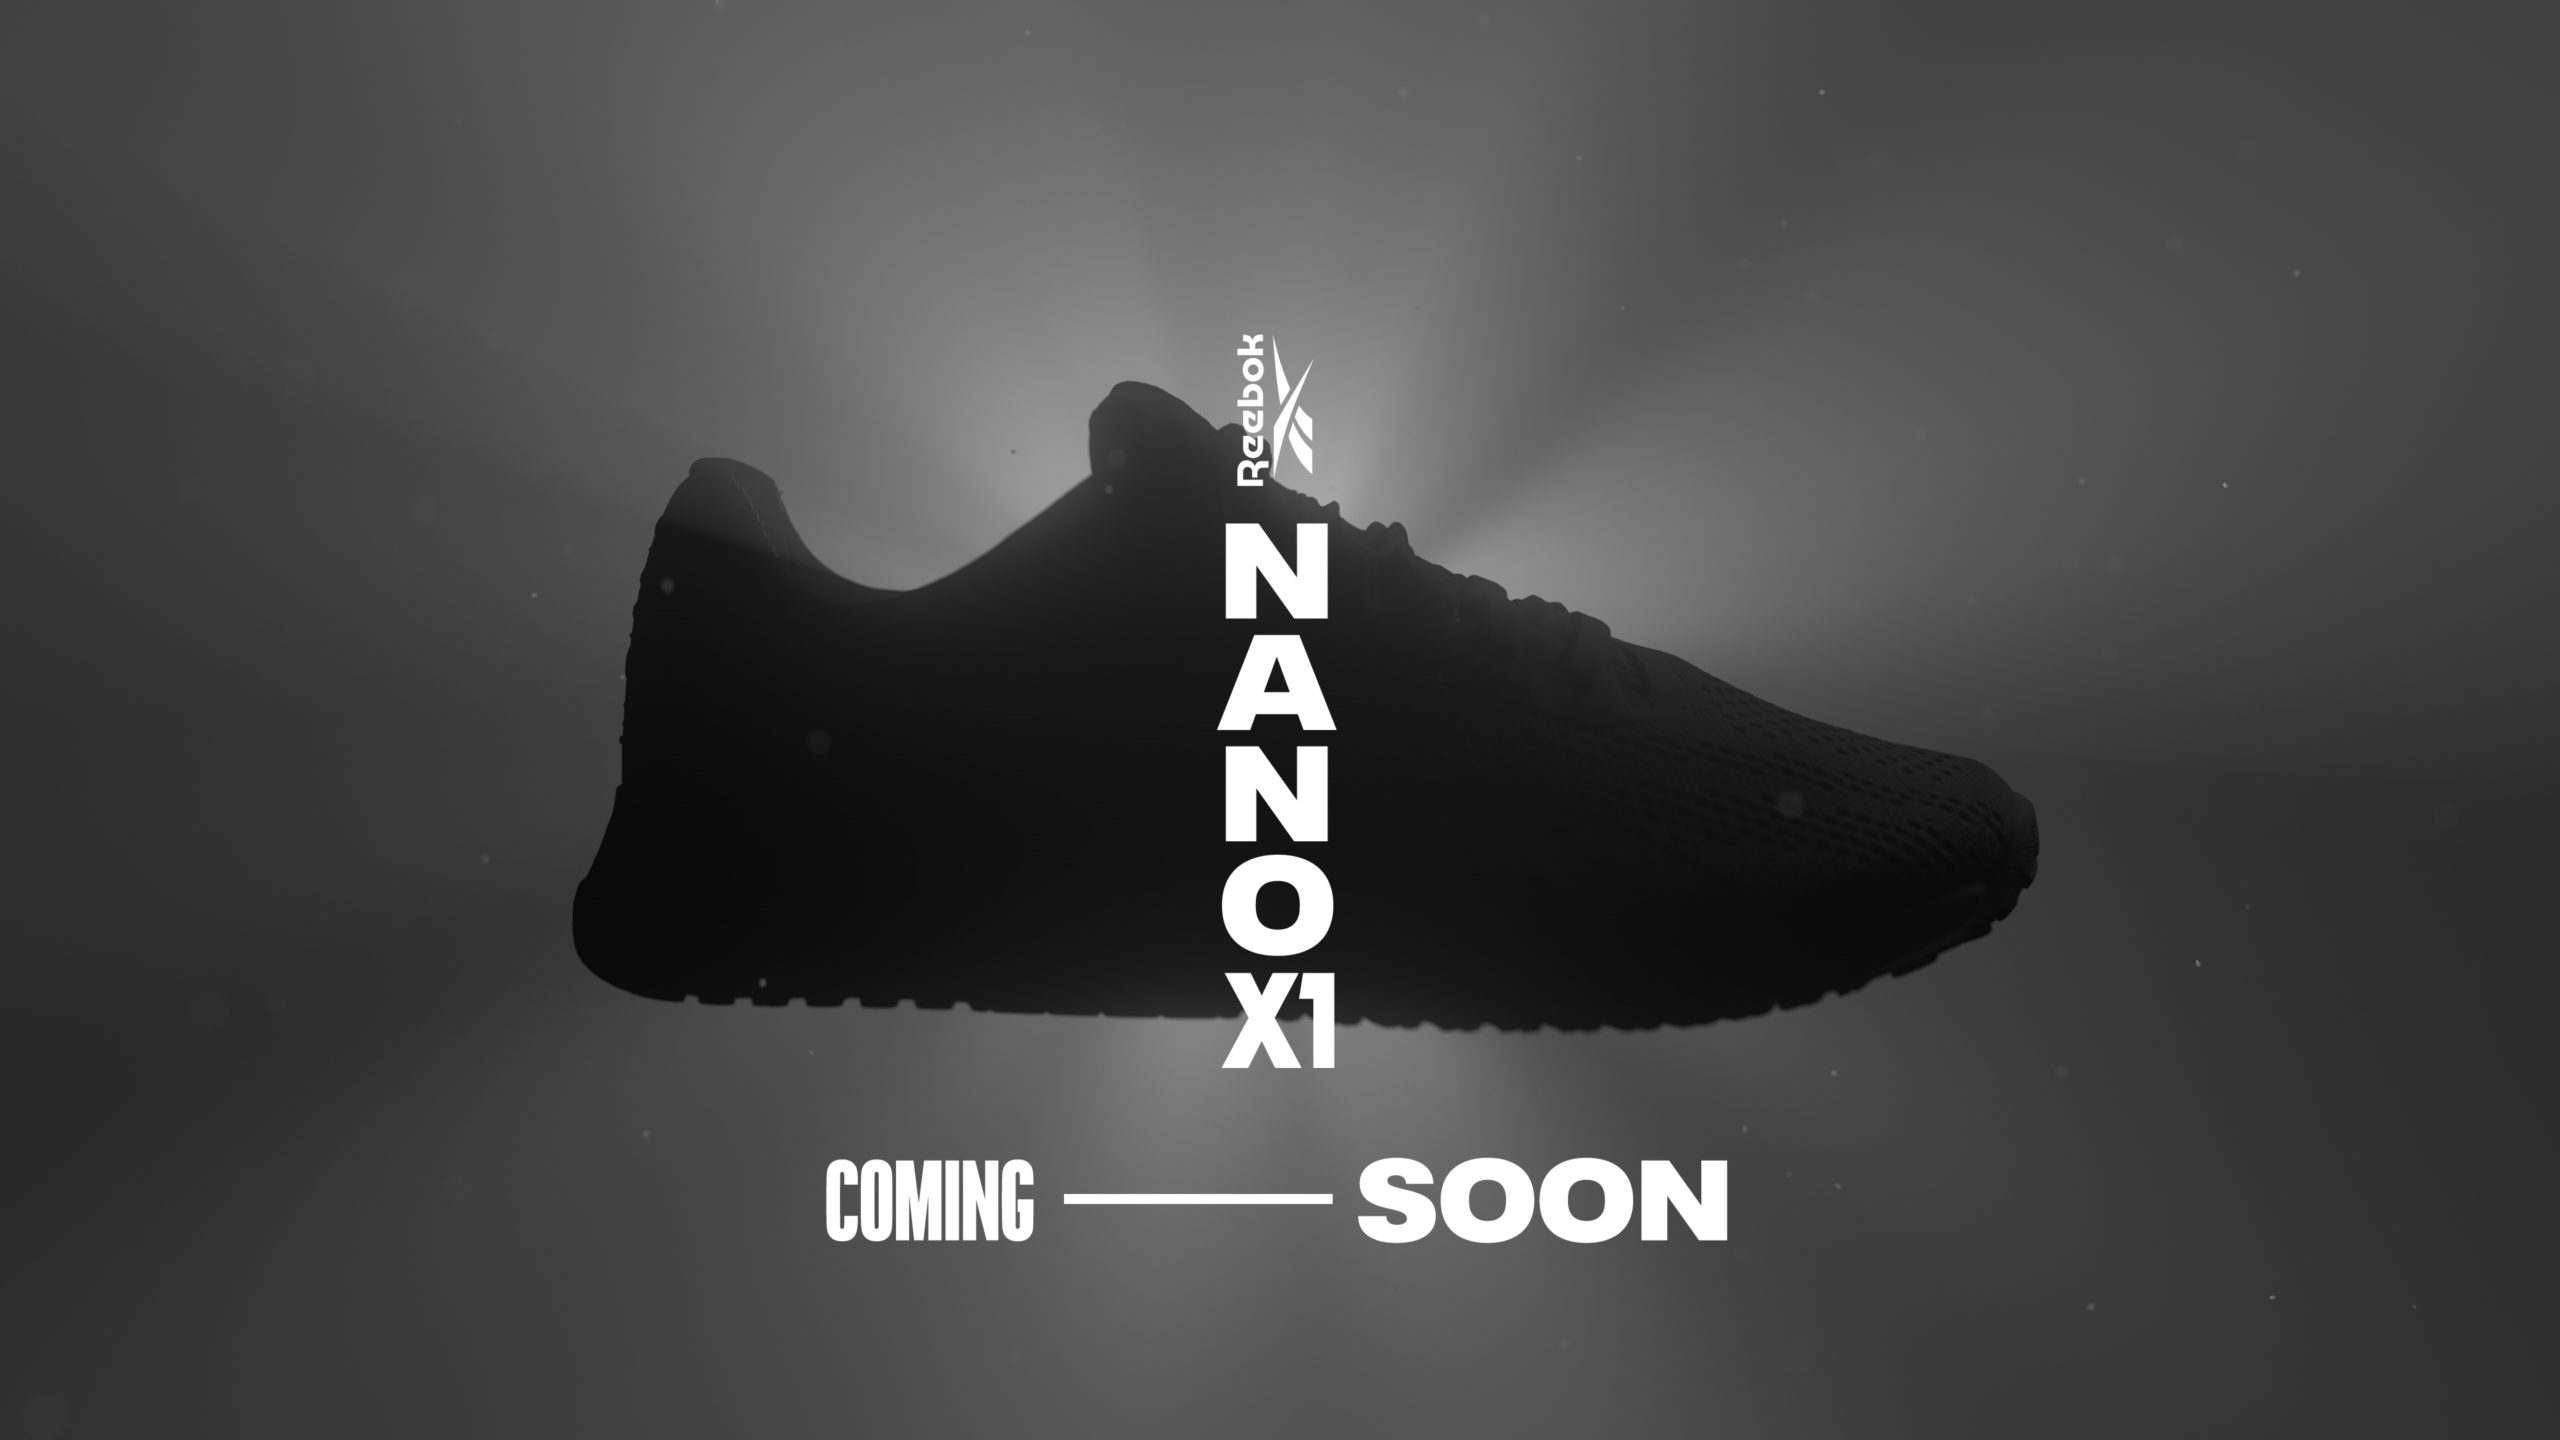 Nano X1 coming soon